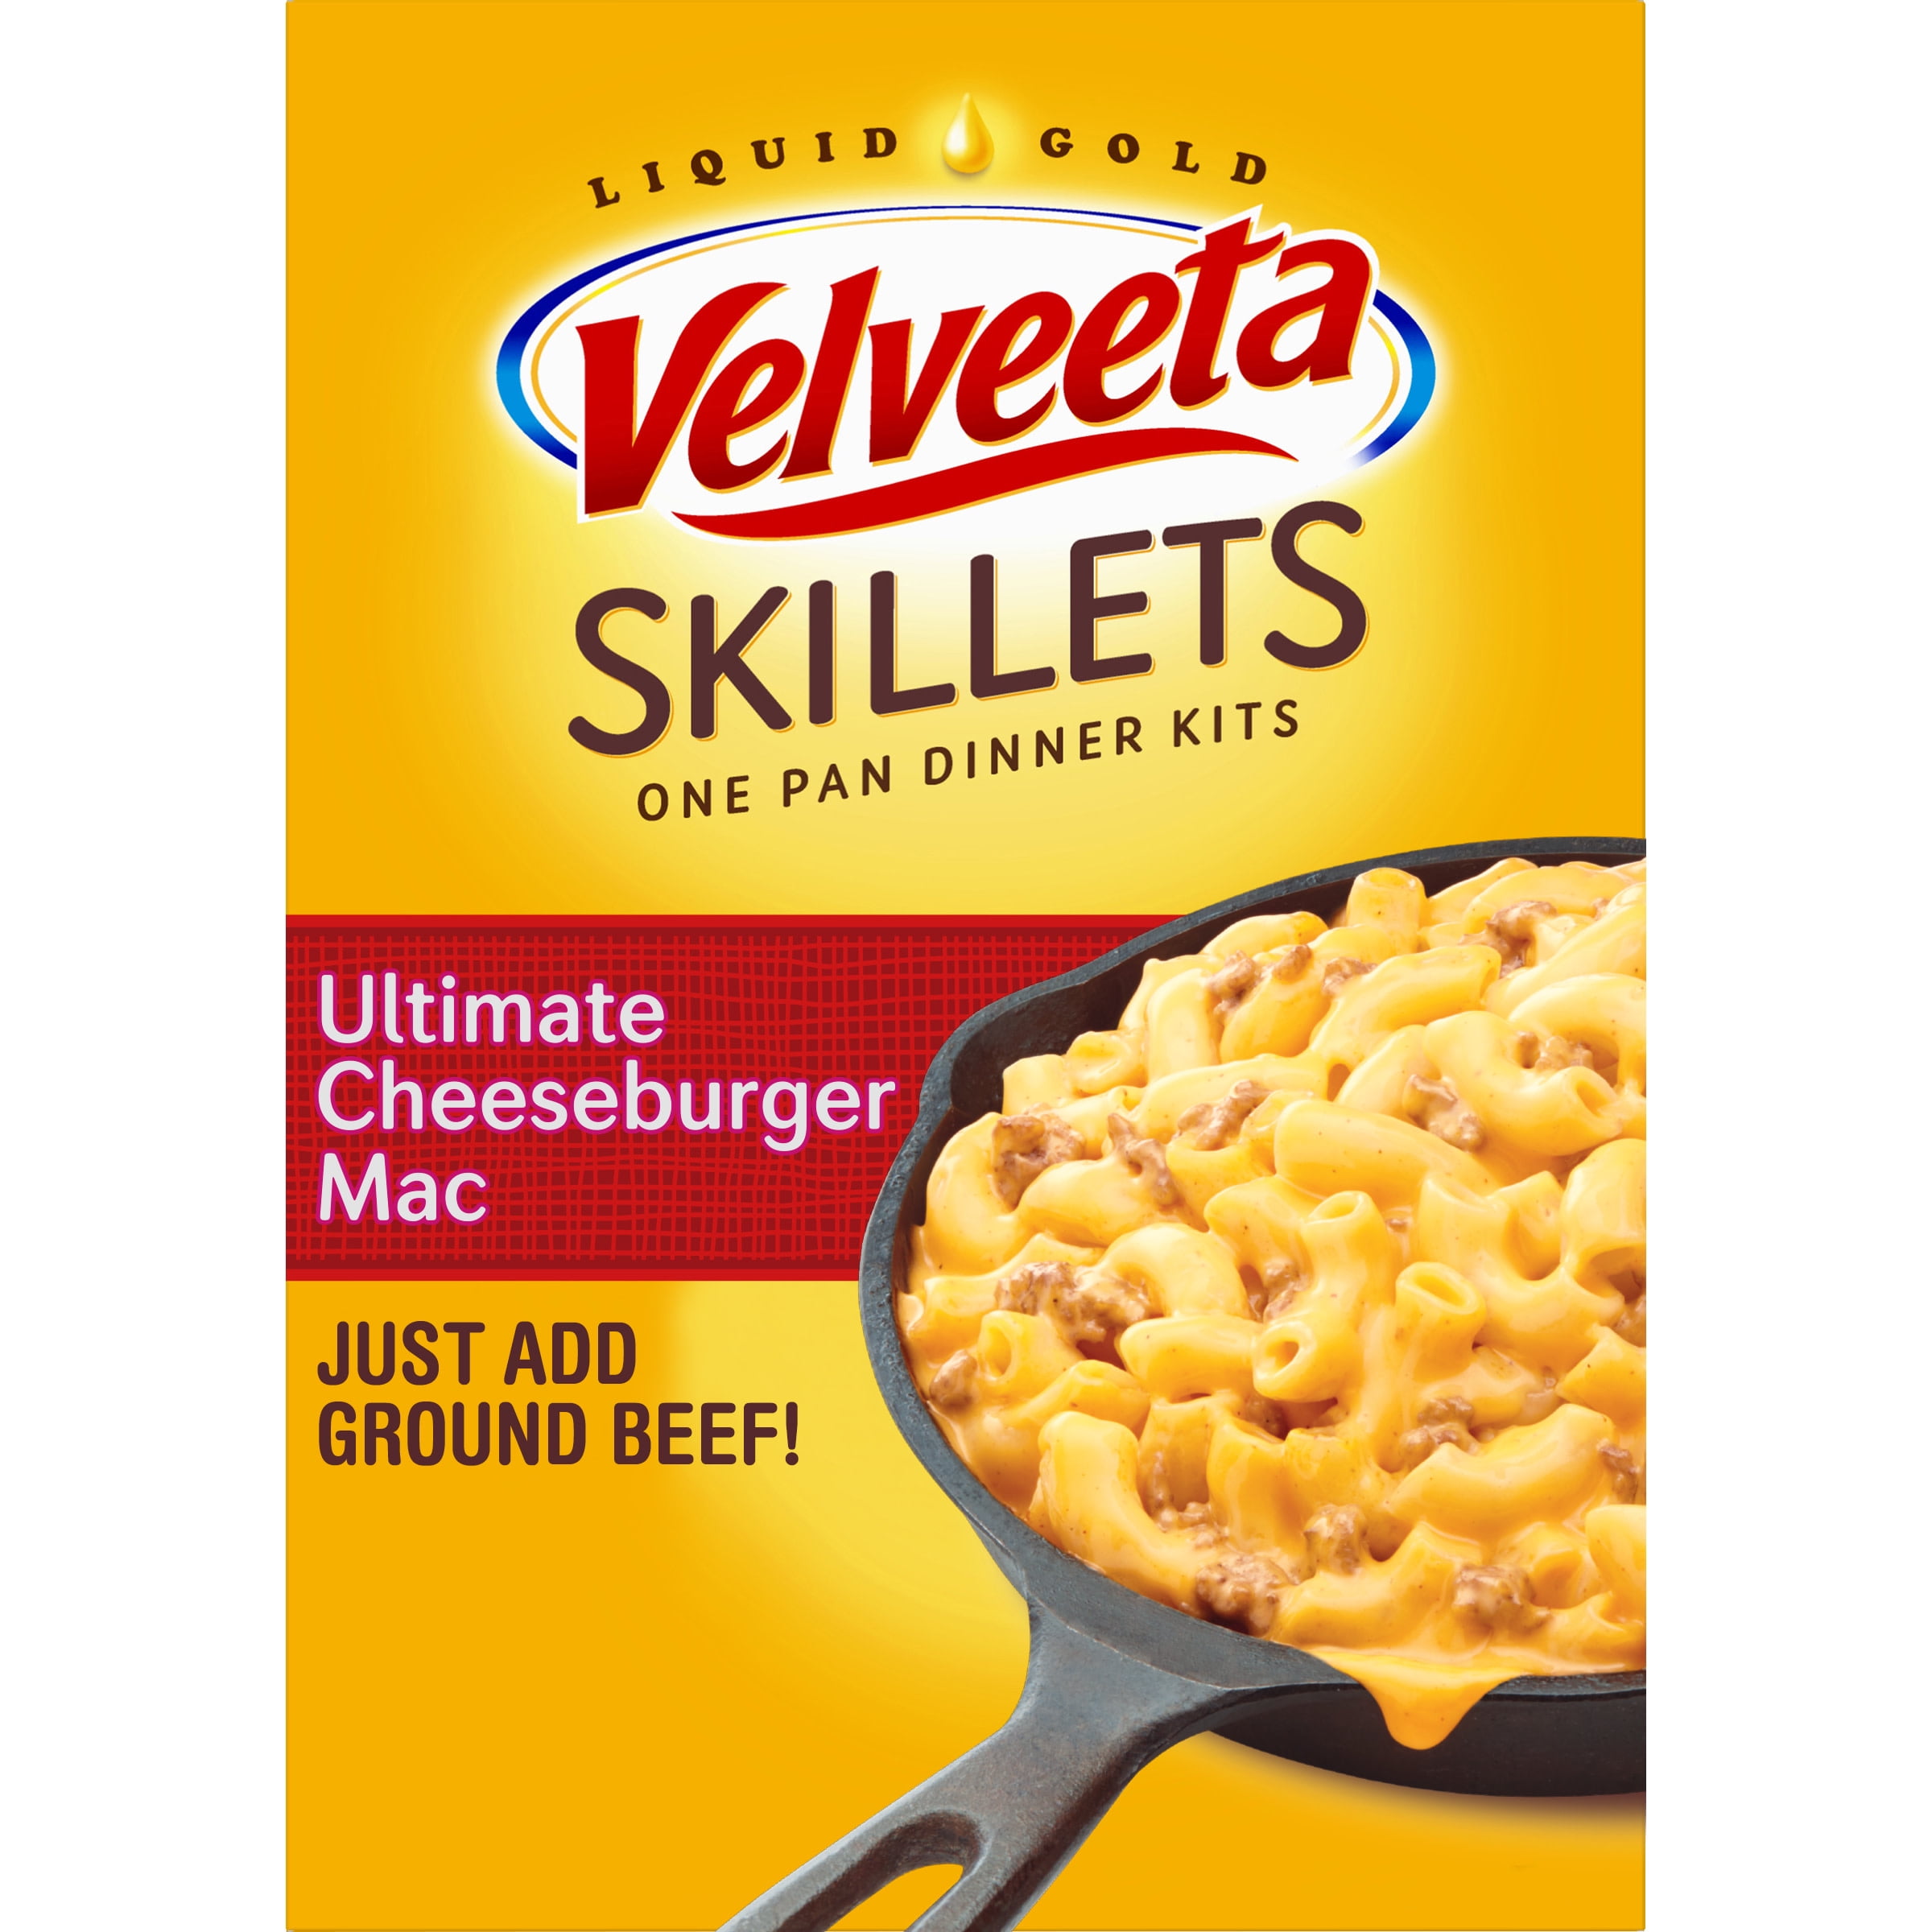 Velveeta Ultimate Cheeseburger Macaroni and Cheese Dinner Kit, 12.8 oz Box